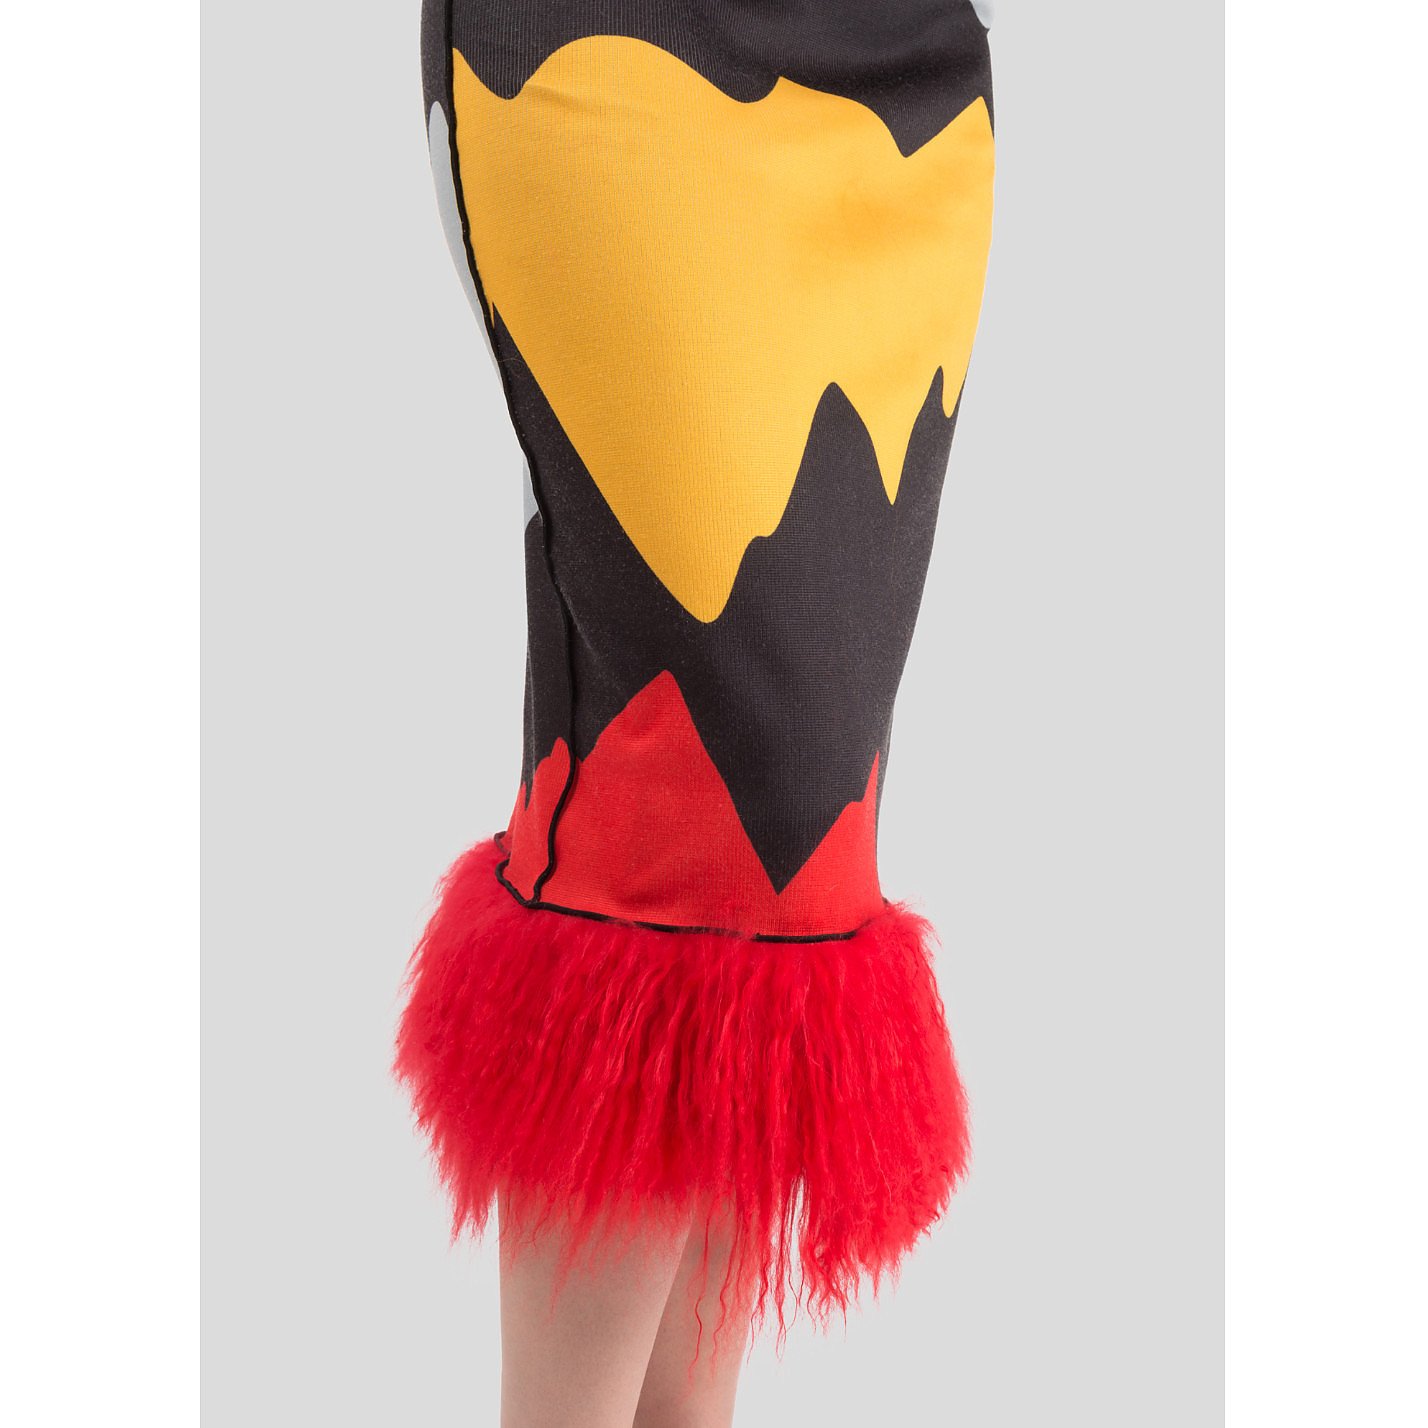 Minnanhui Printed Faux-Fur Trimmed Skirt